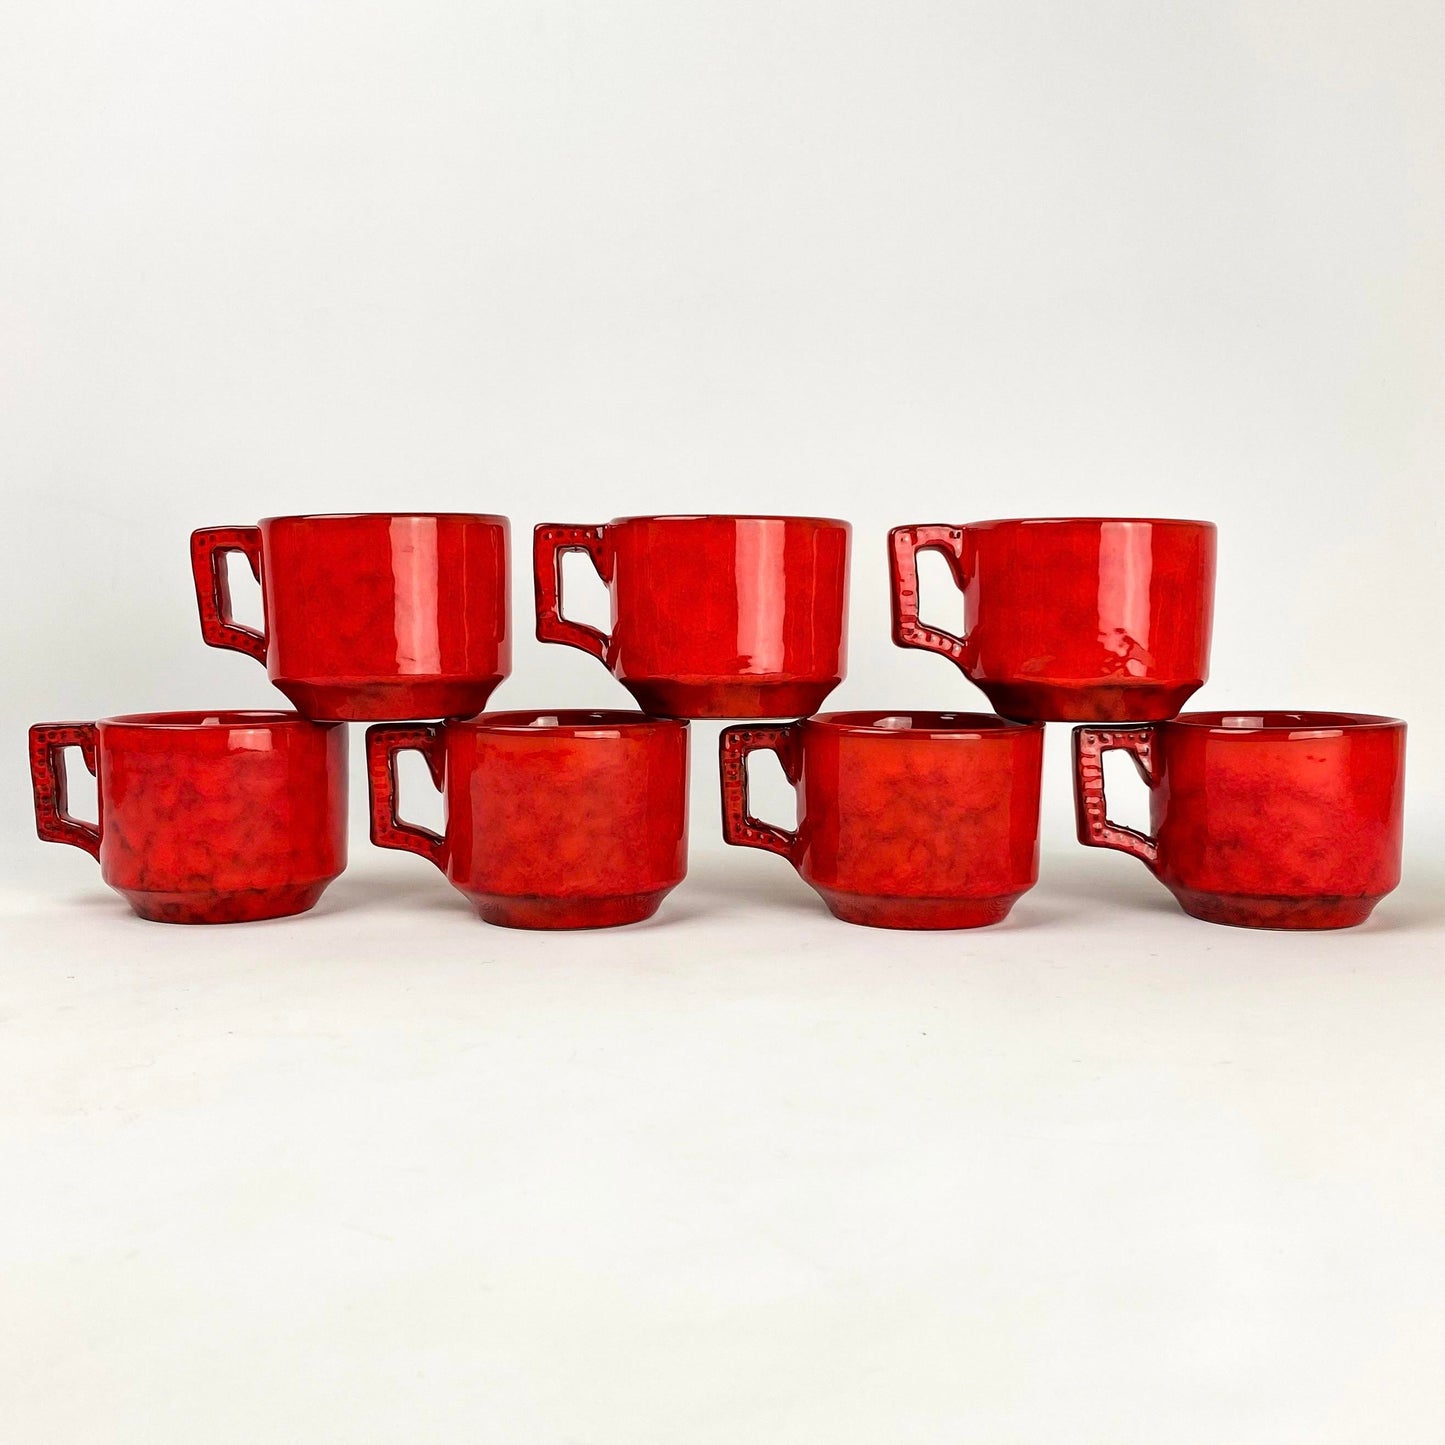 P V Italy Ceramic Orange Red Coffee/Tea and Serving Set- 25 Total Piece Set